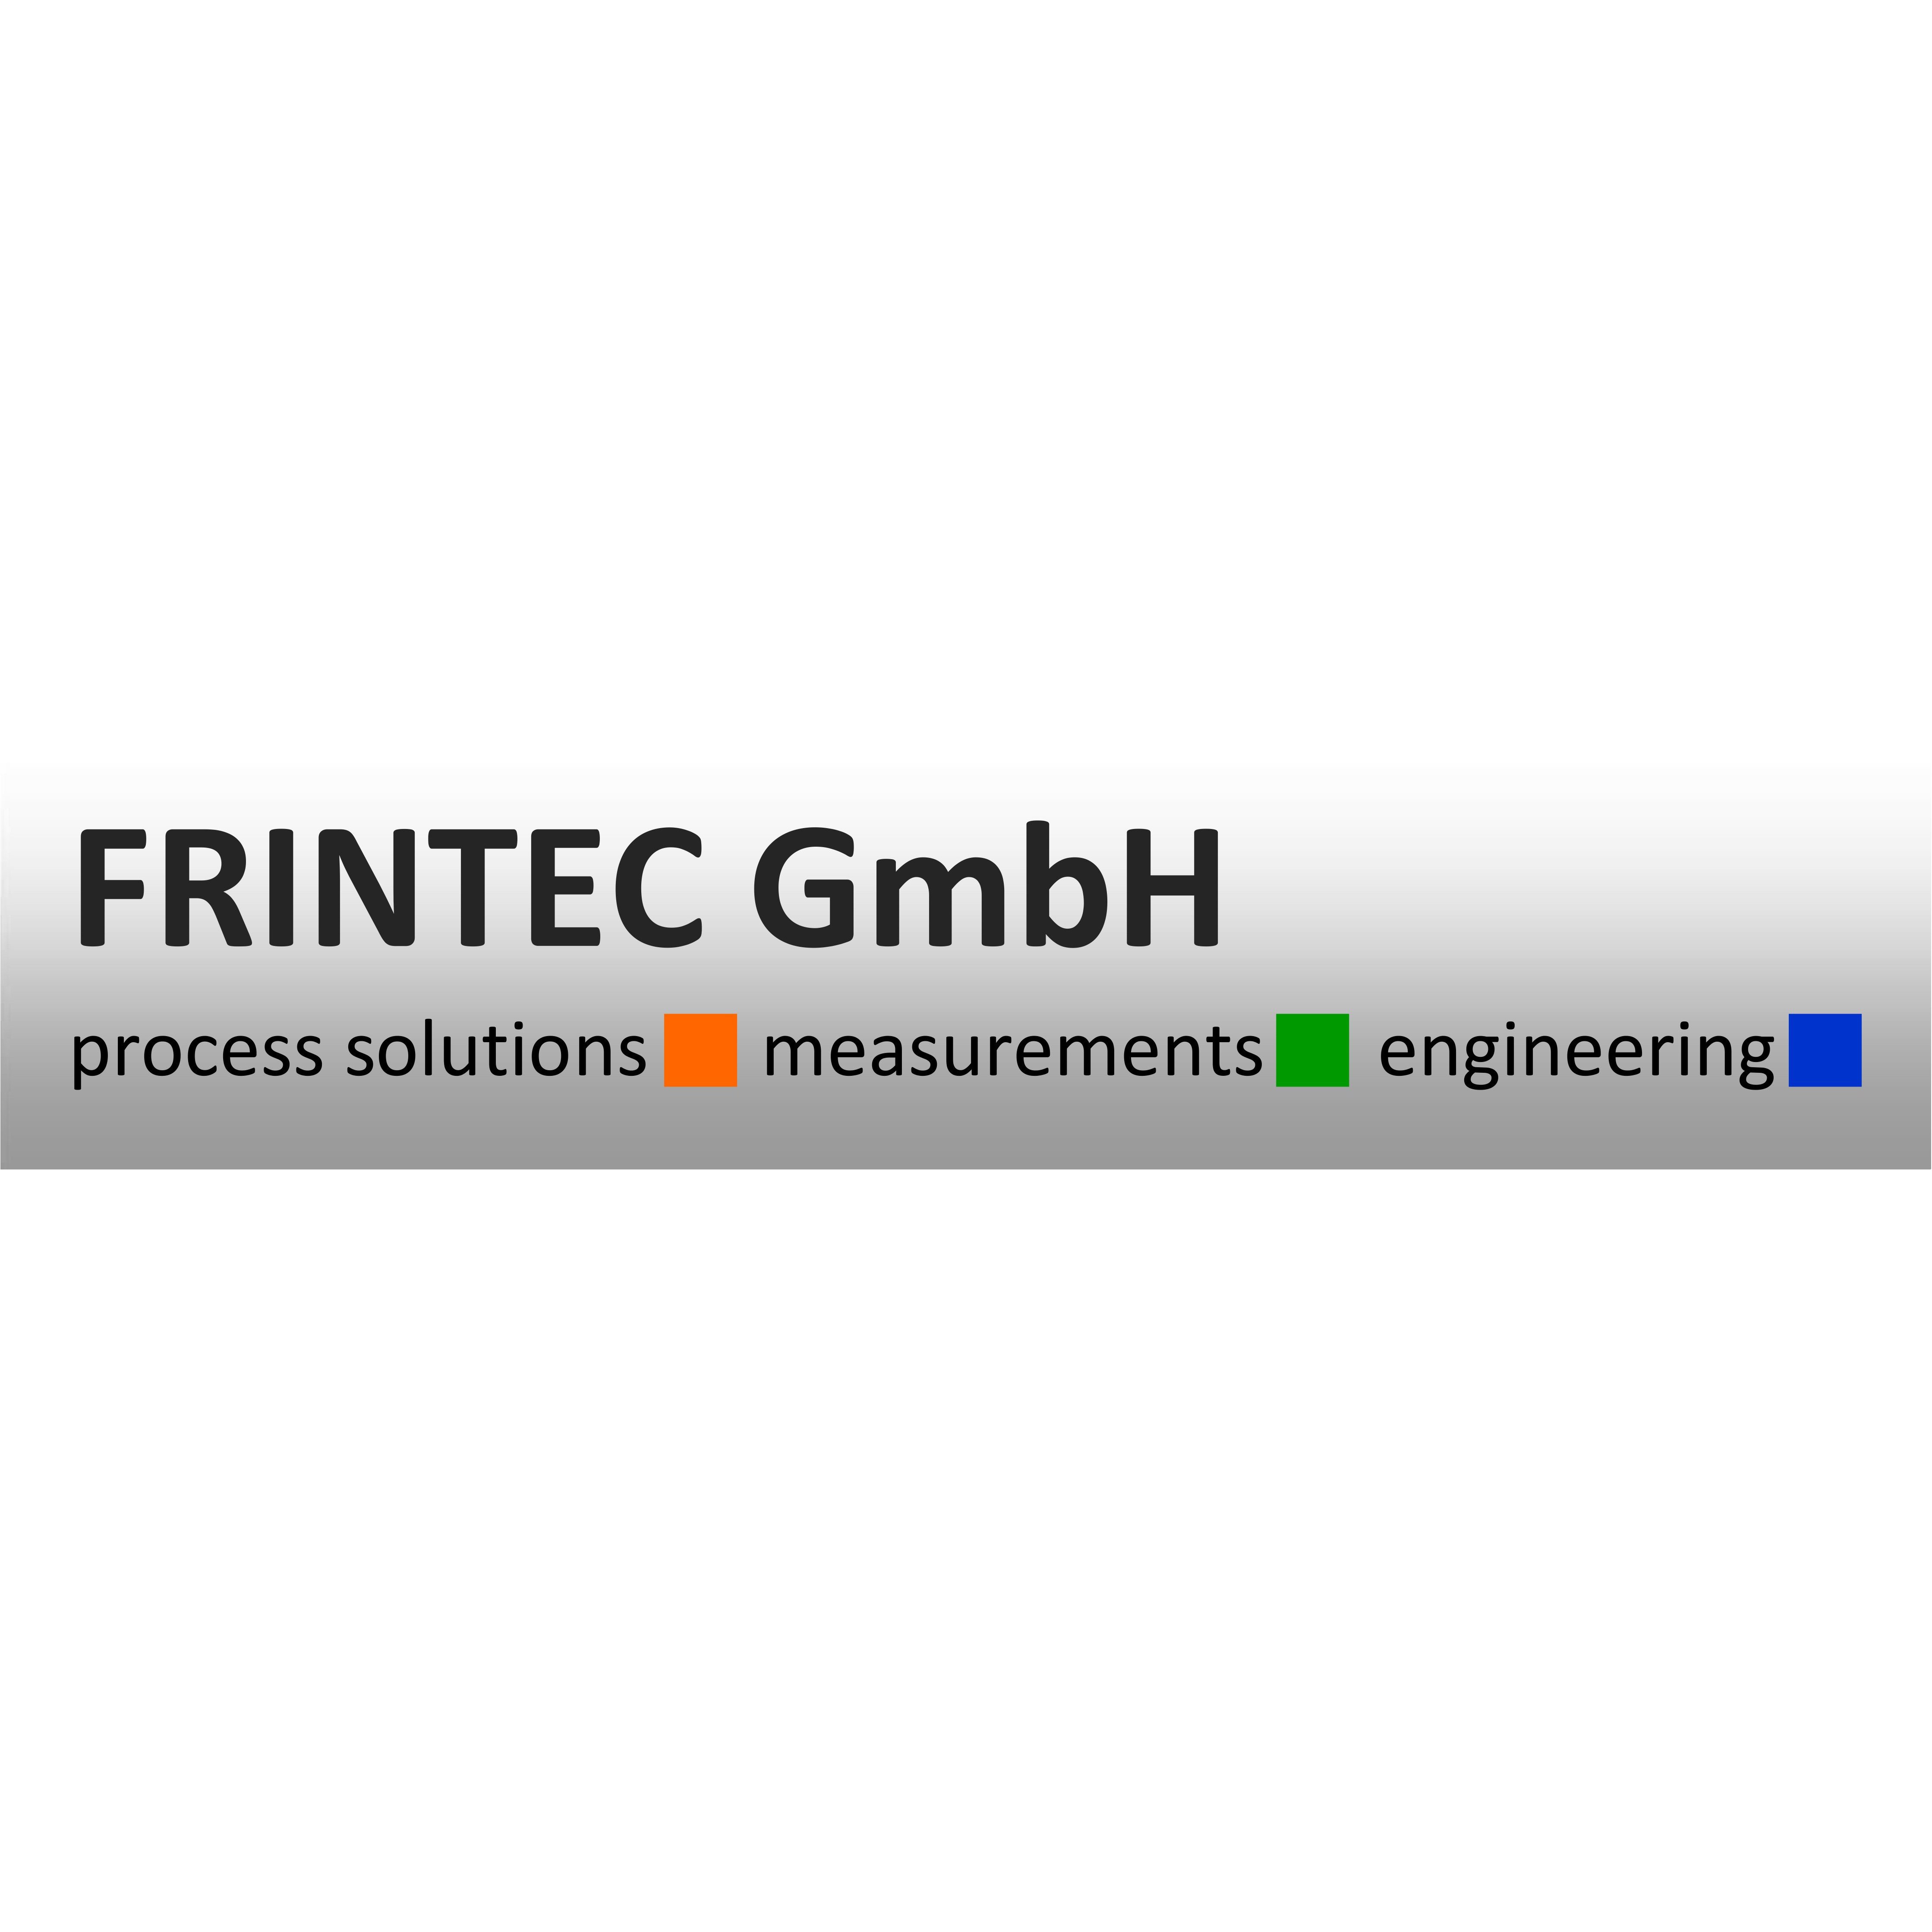 FRINTEC GmbH